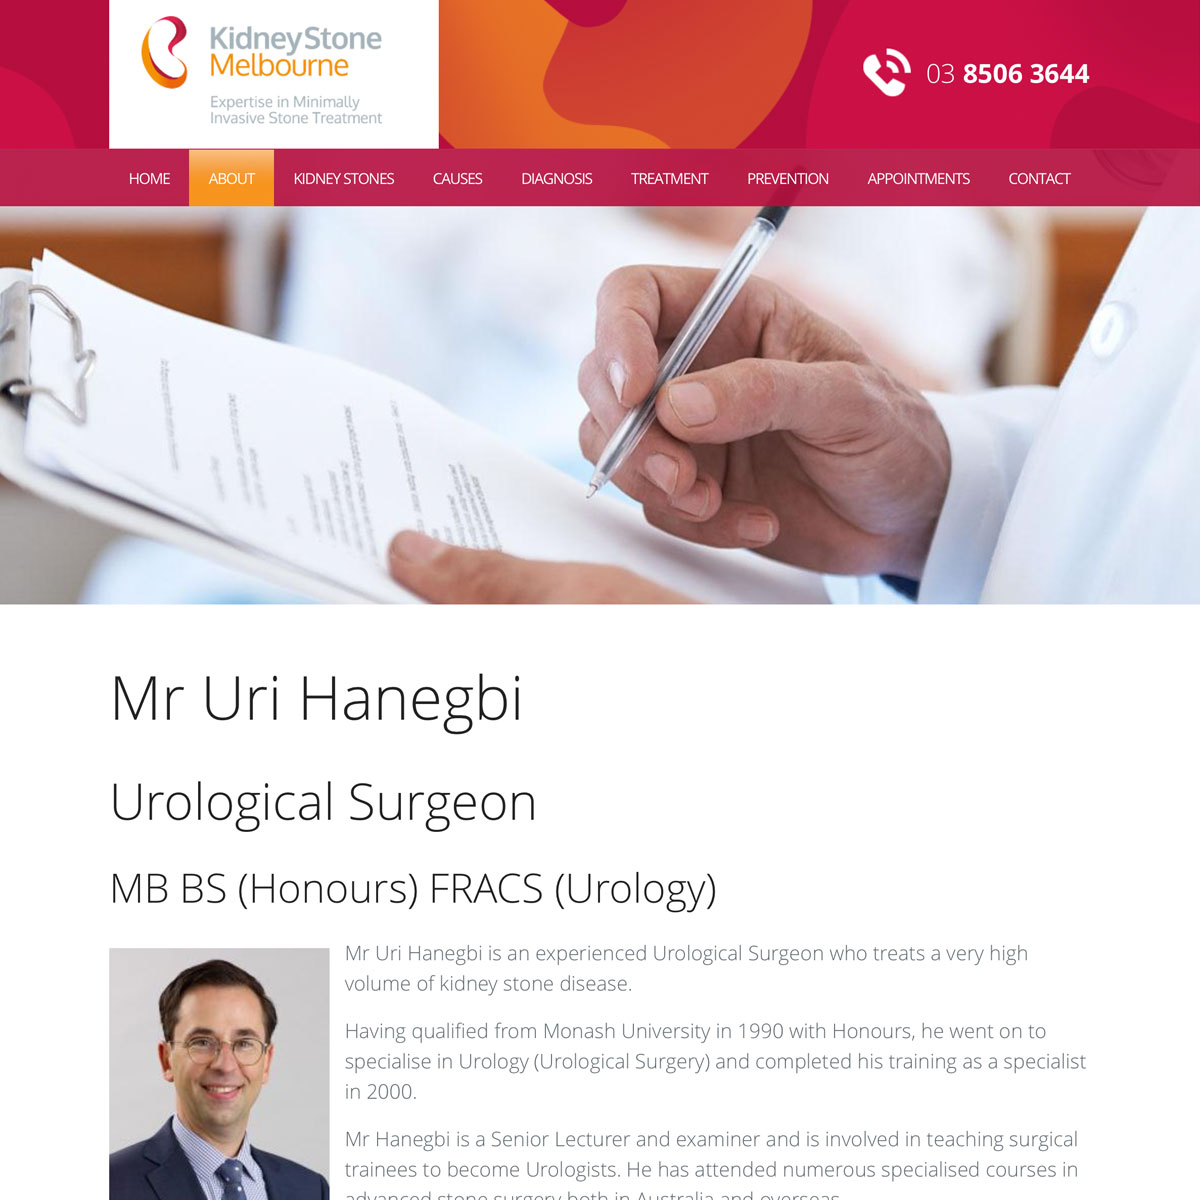 Kidney Stone Melbourne - Mr Uri Hanegbi